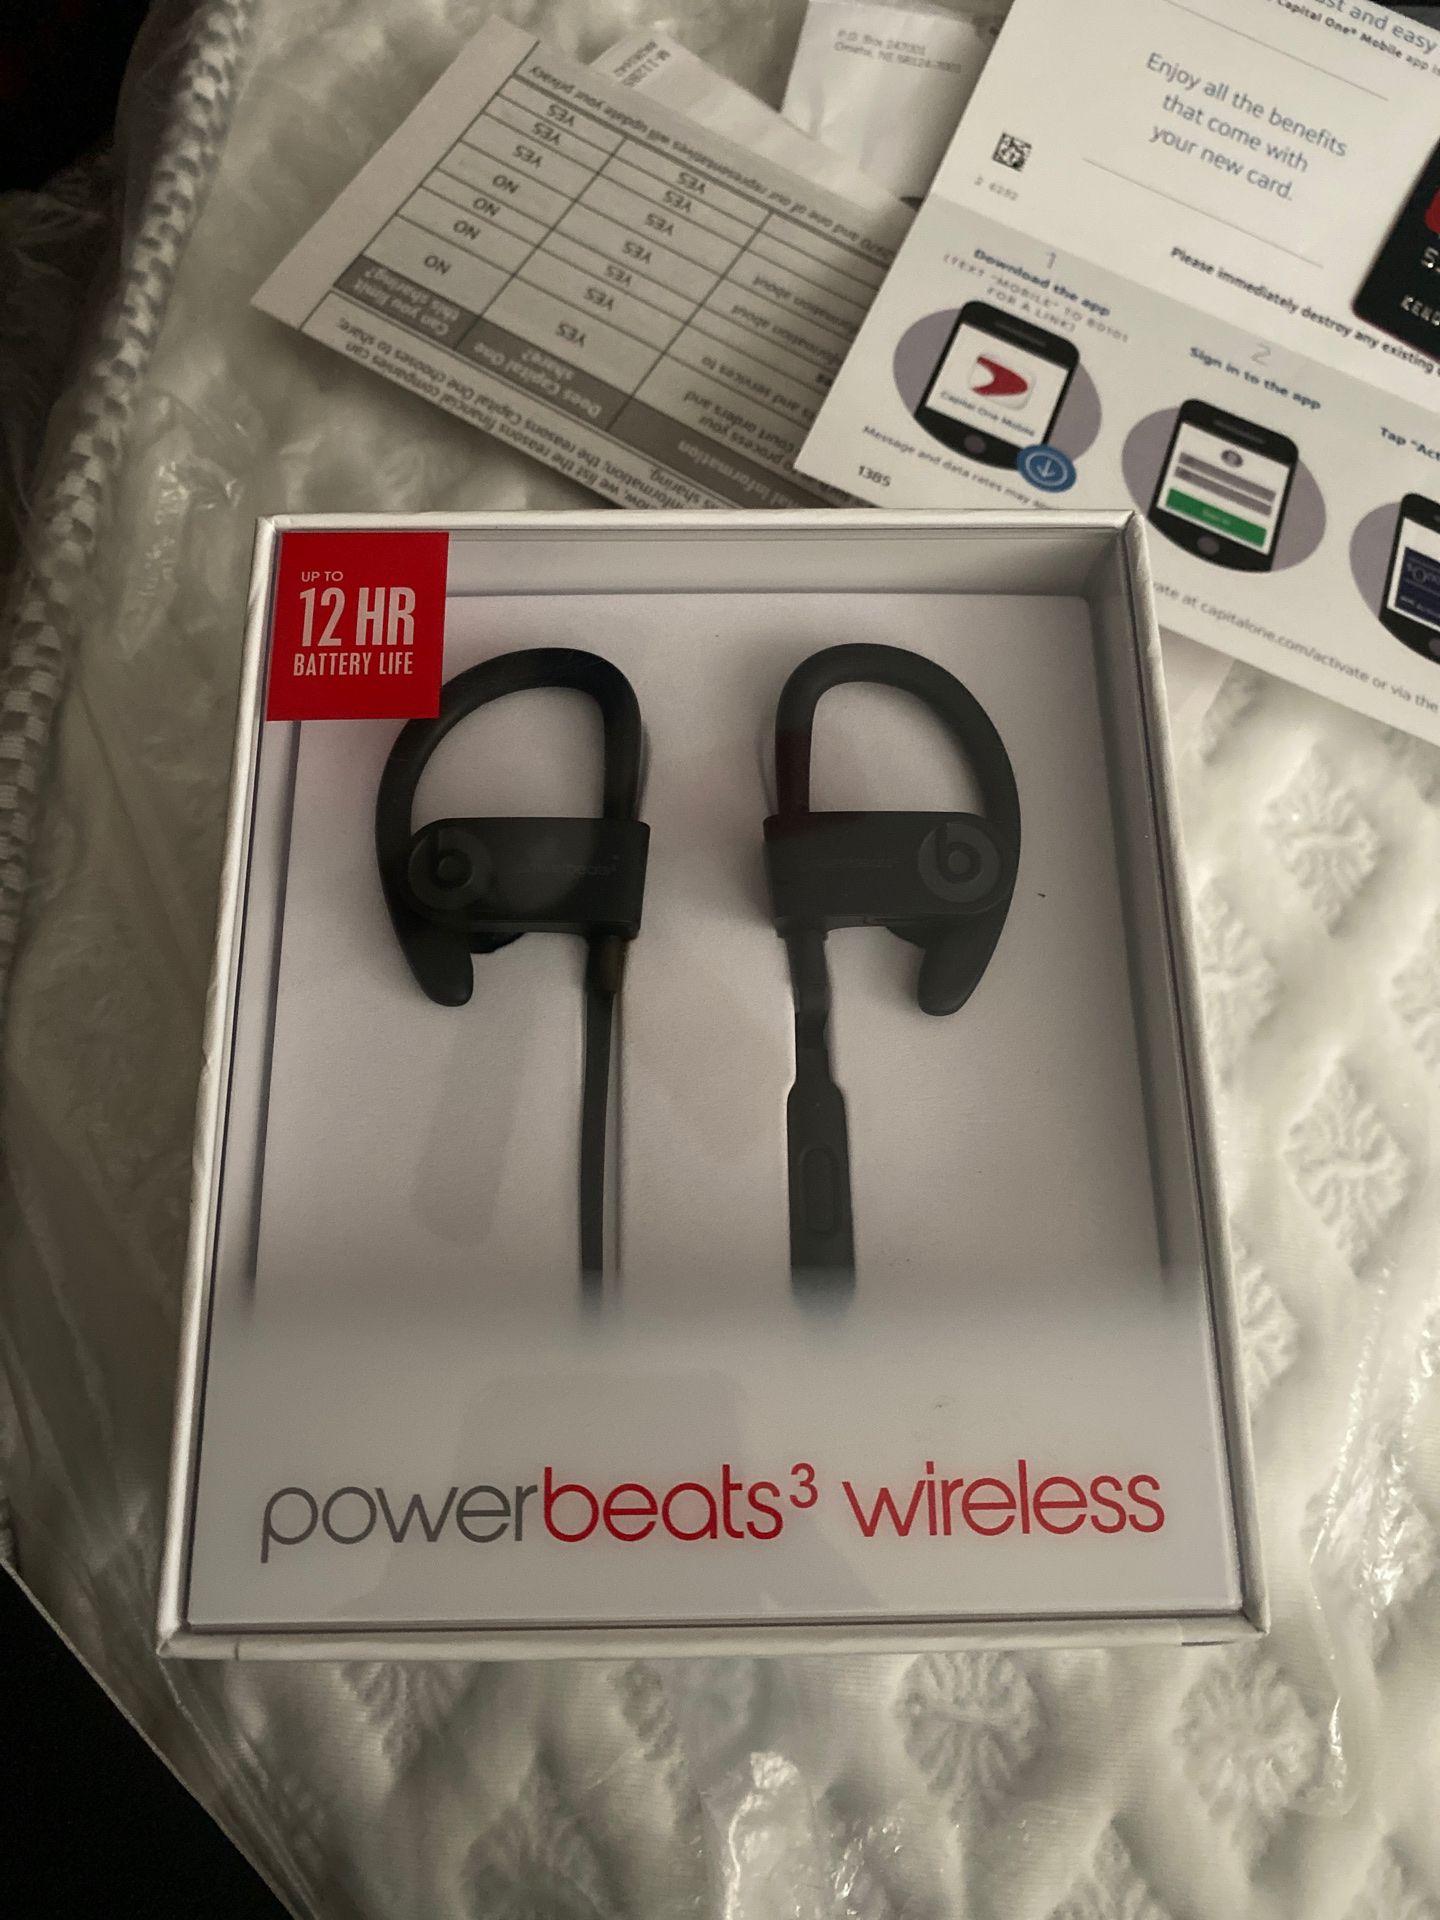 Power beats 3 wireless brand new